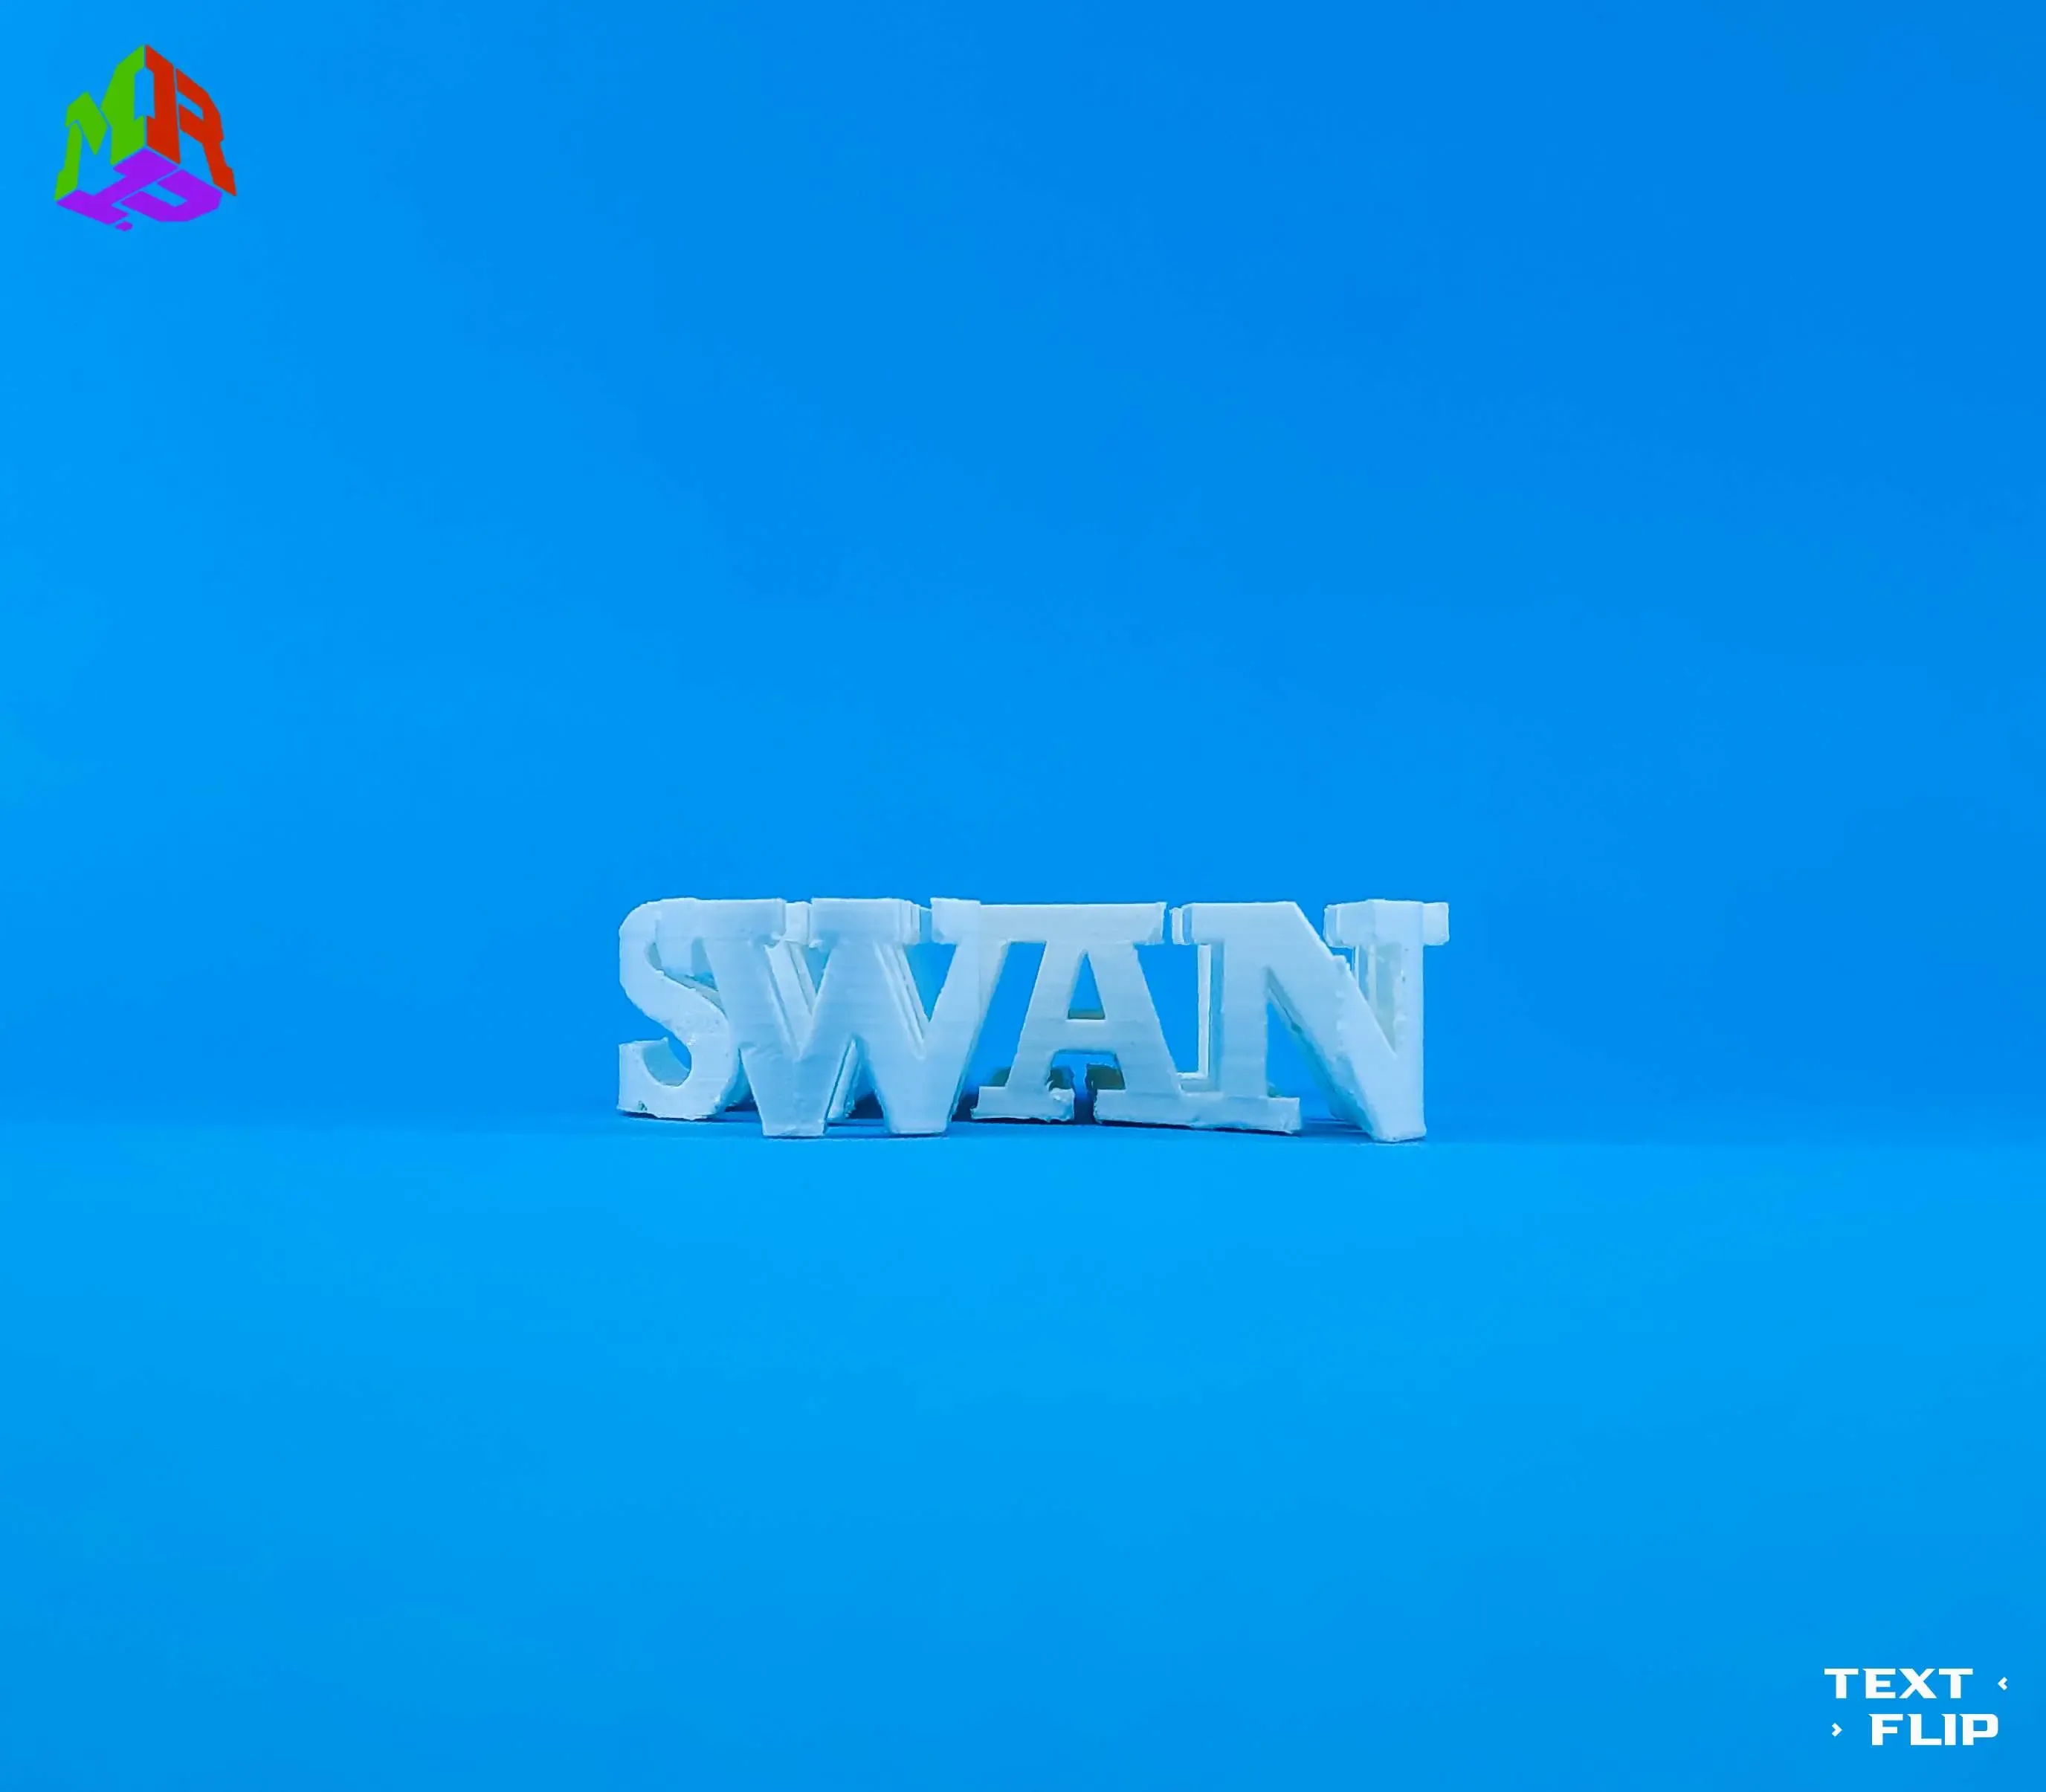 Text Flip - Swan